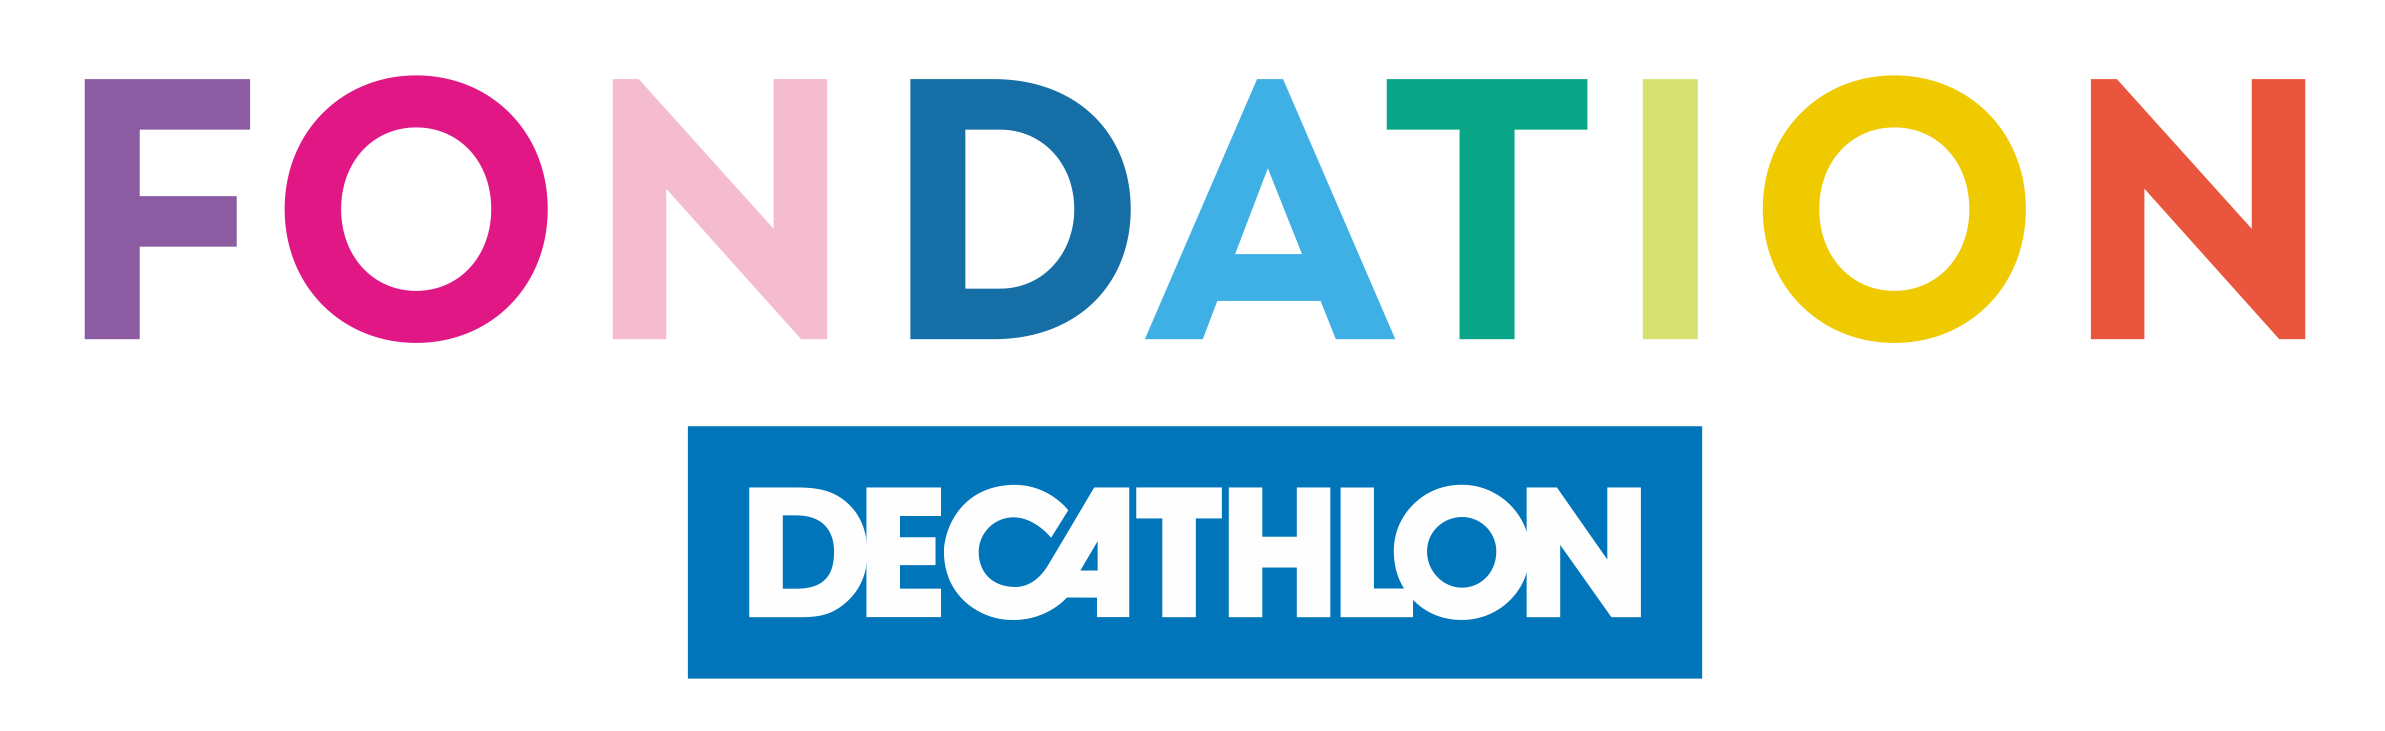 Fondation Decathlon logo